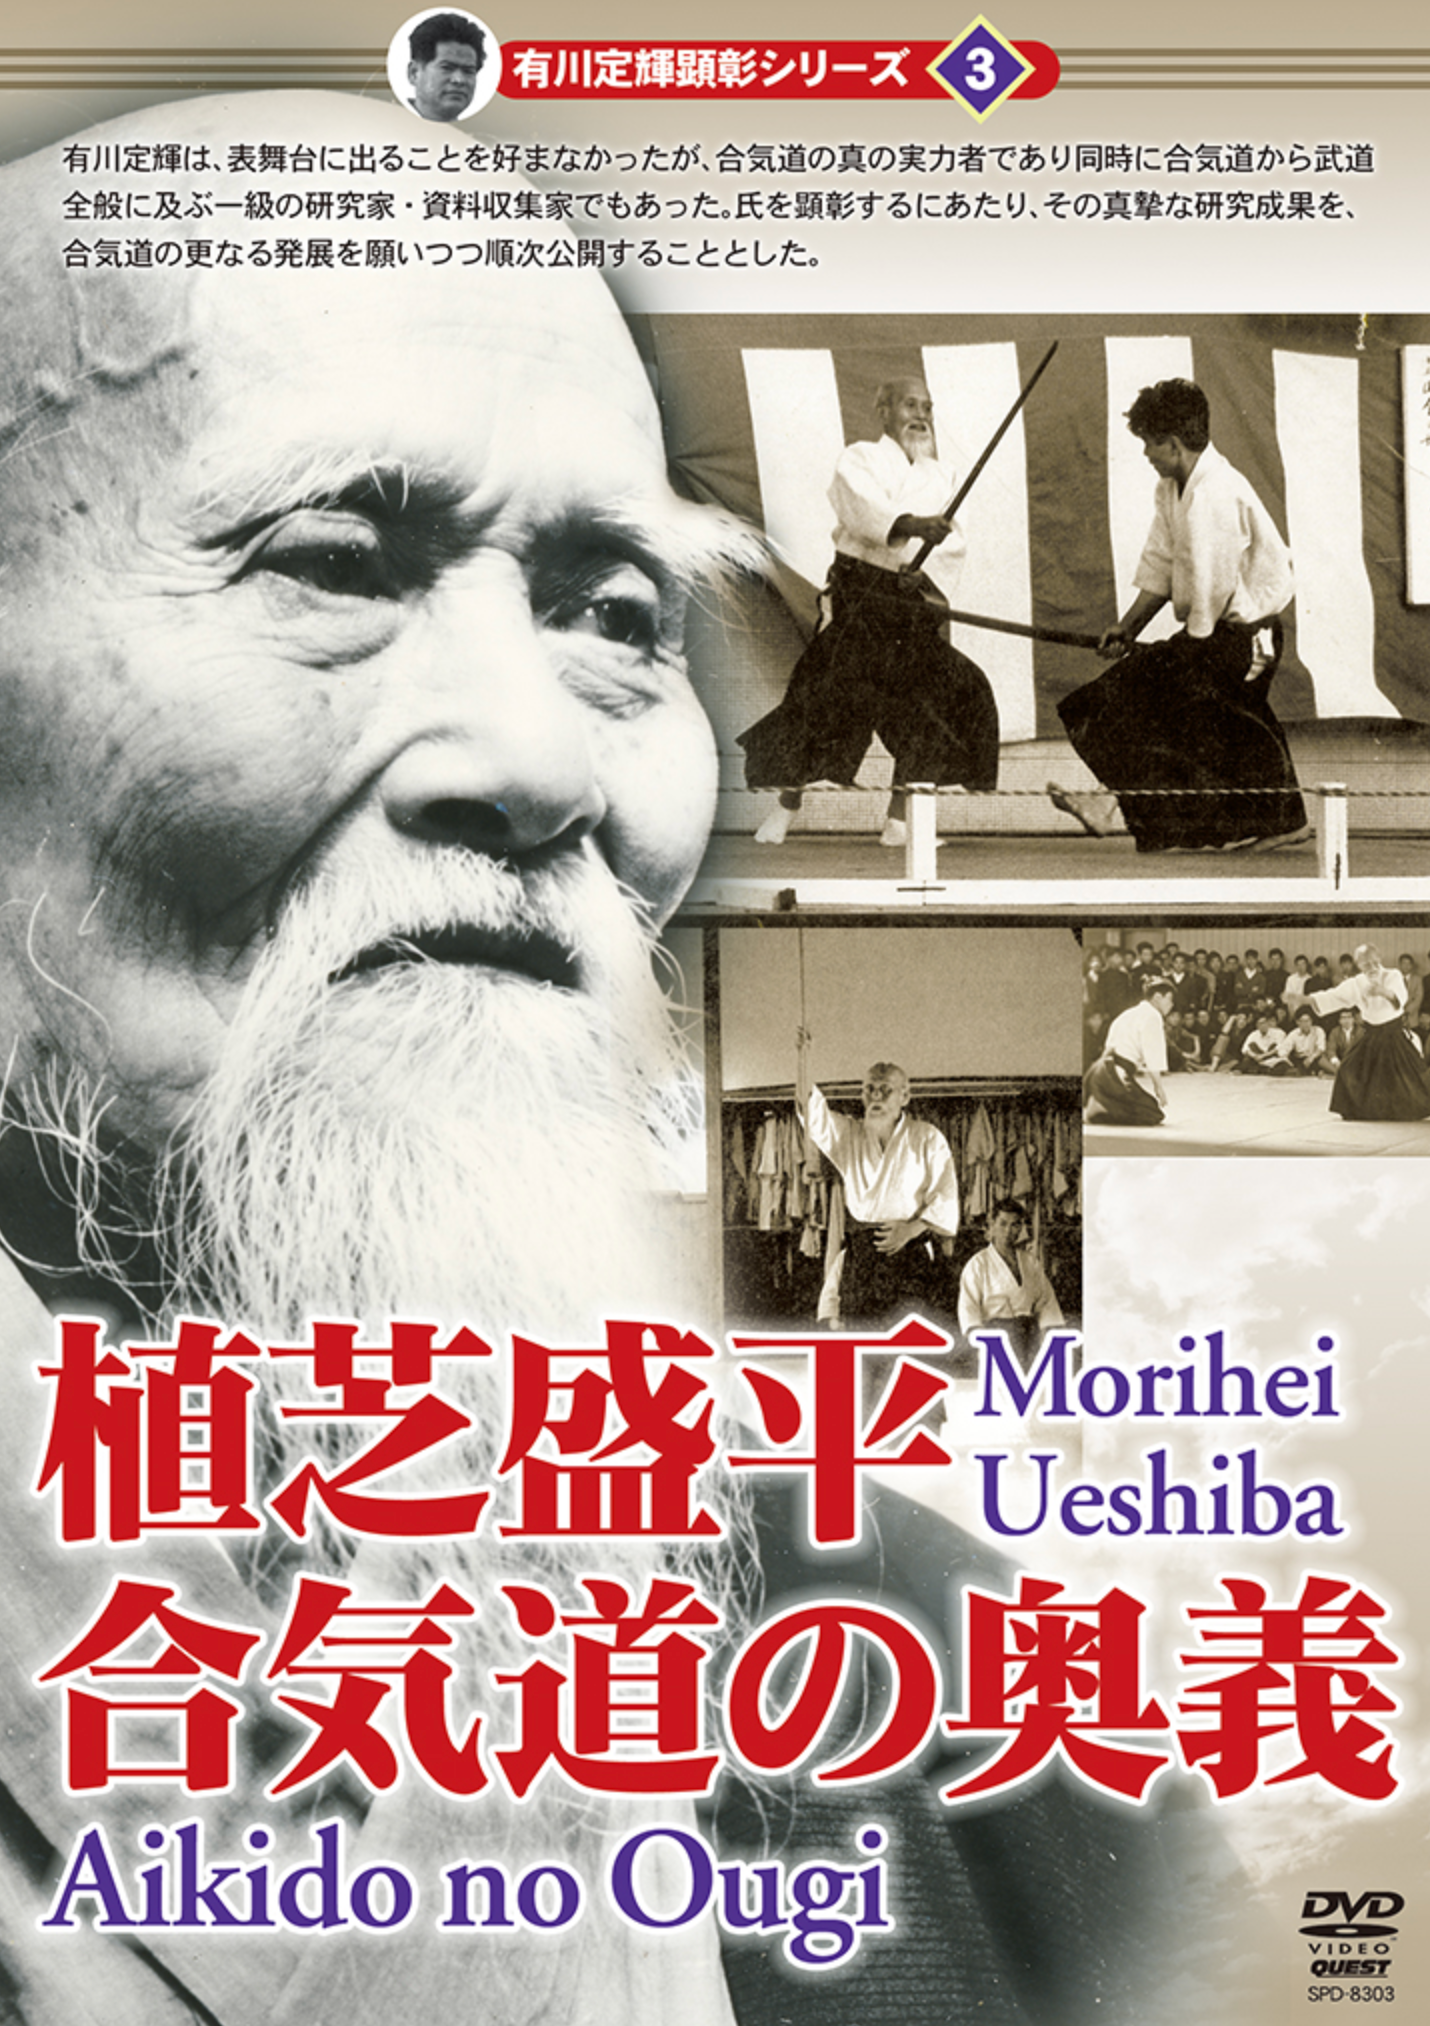 Aikido no Ougi DVD with Morihei Ueshiba - Budovideos Inc